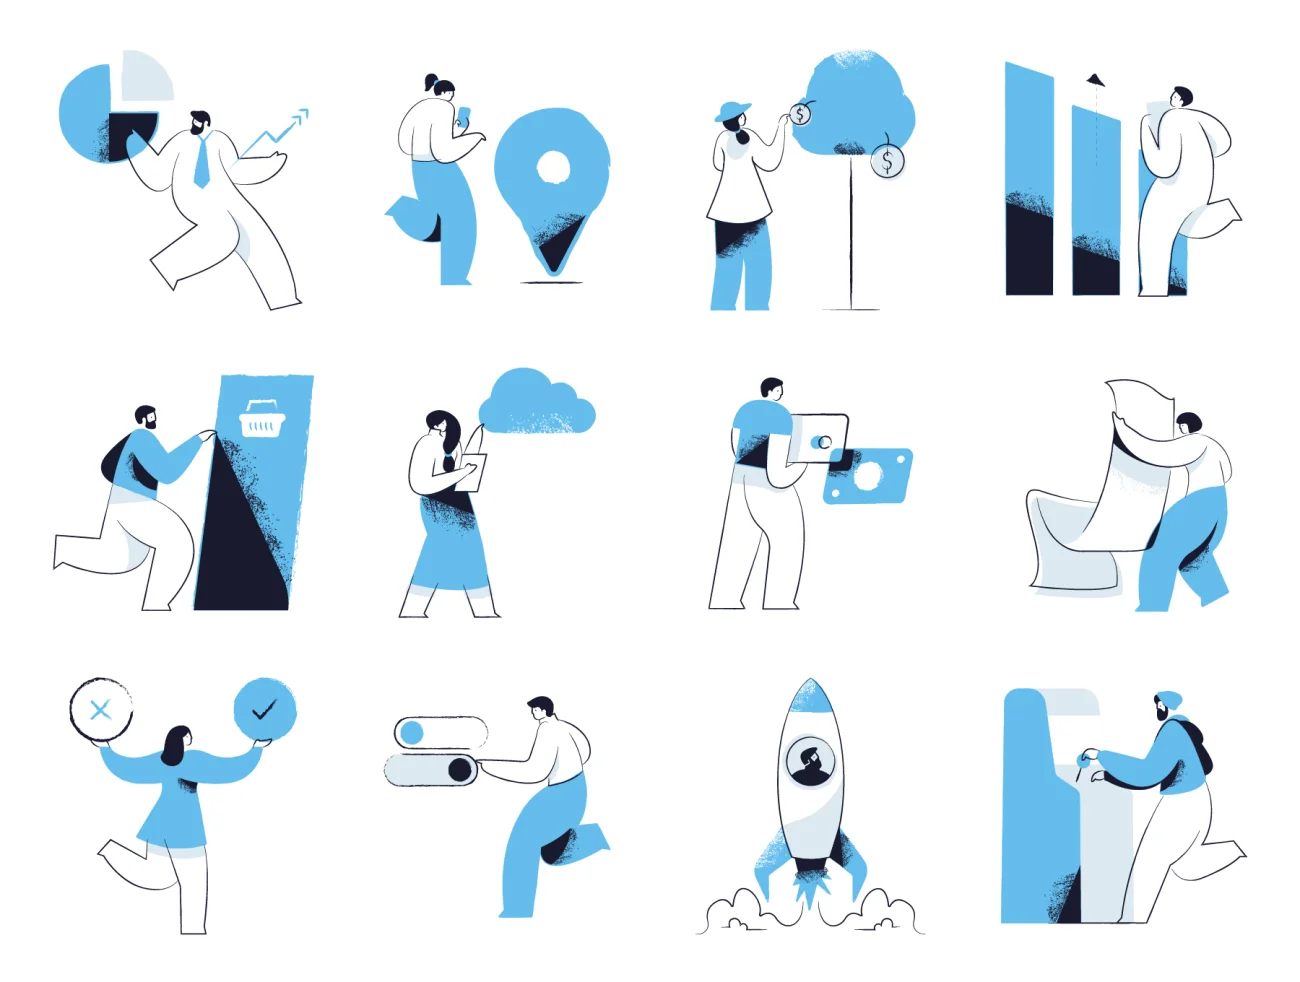 Zima Blue Illustrations蓝色线条插画-人物插画、商业金融、场景插画、插画、插画功能、插画风格、数据演示、概念创意、线条手绘、职场办公、营销创业、趣味漫画、金融理财-到位啦UI